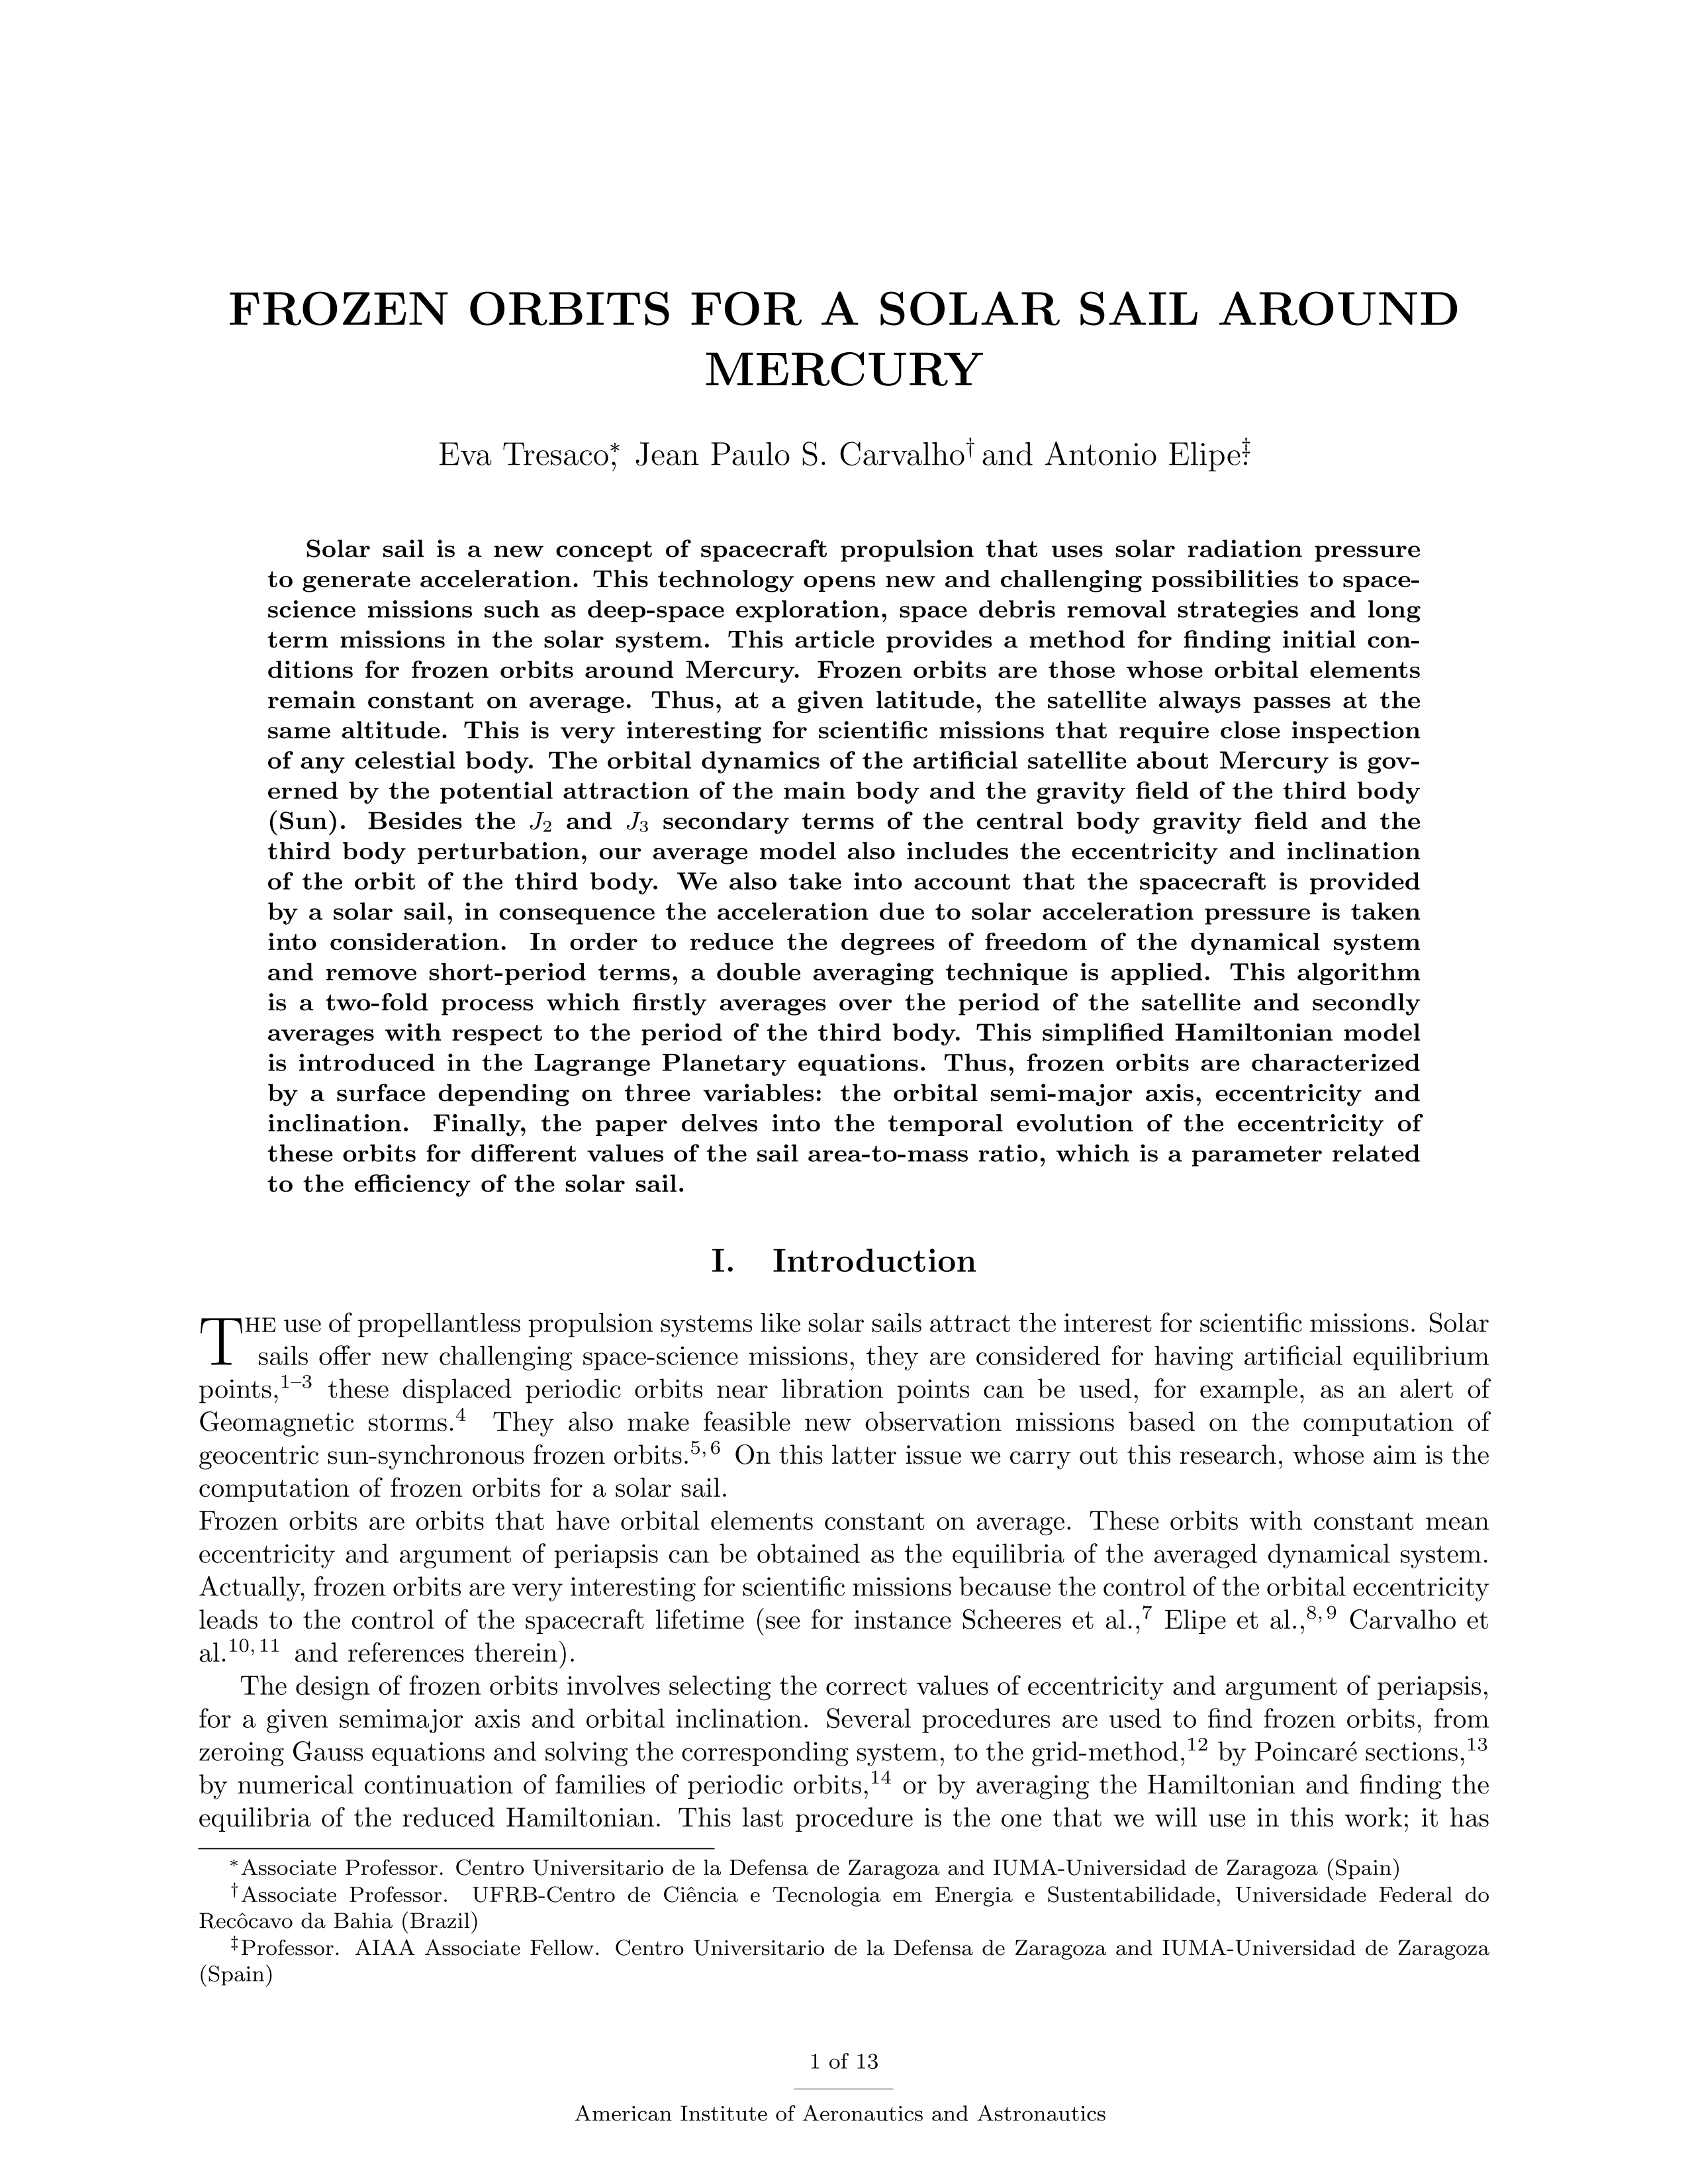 Frozen orbits for a solar sail around Mercury